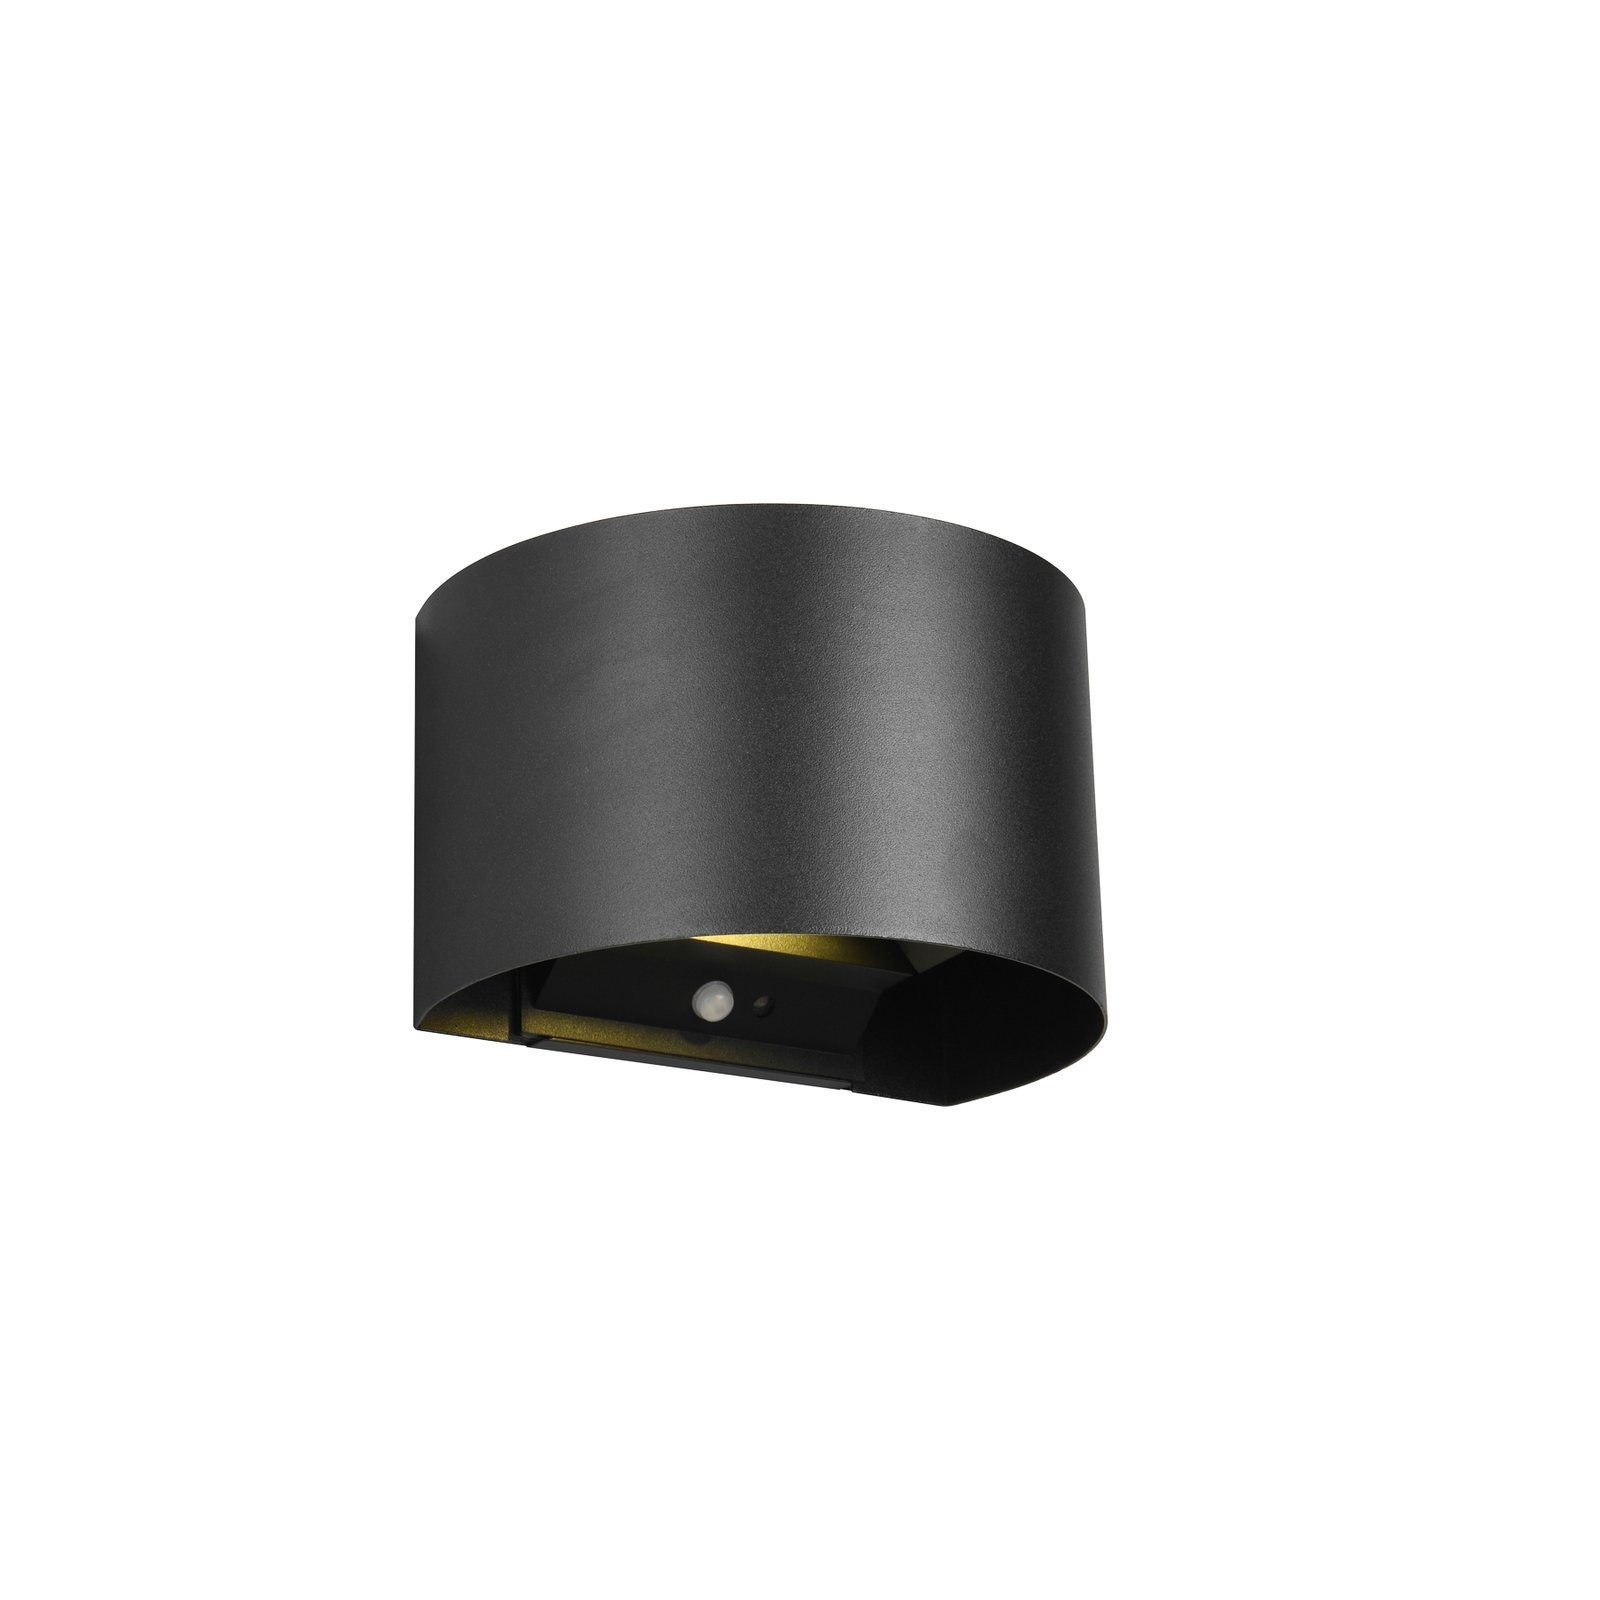 LED-Akku-Außenwandlampe Talent, schwarz, Breite 16 cm Sensor